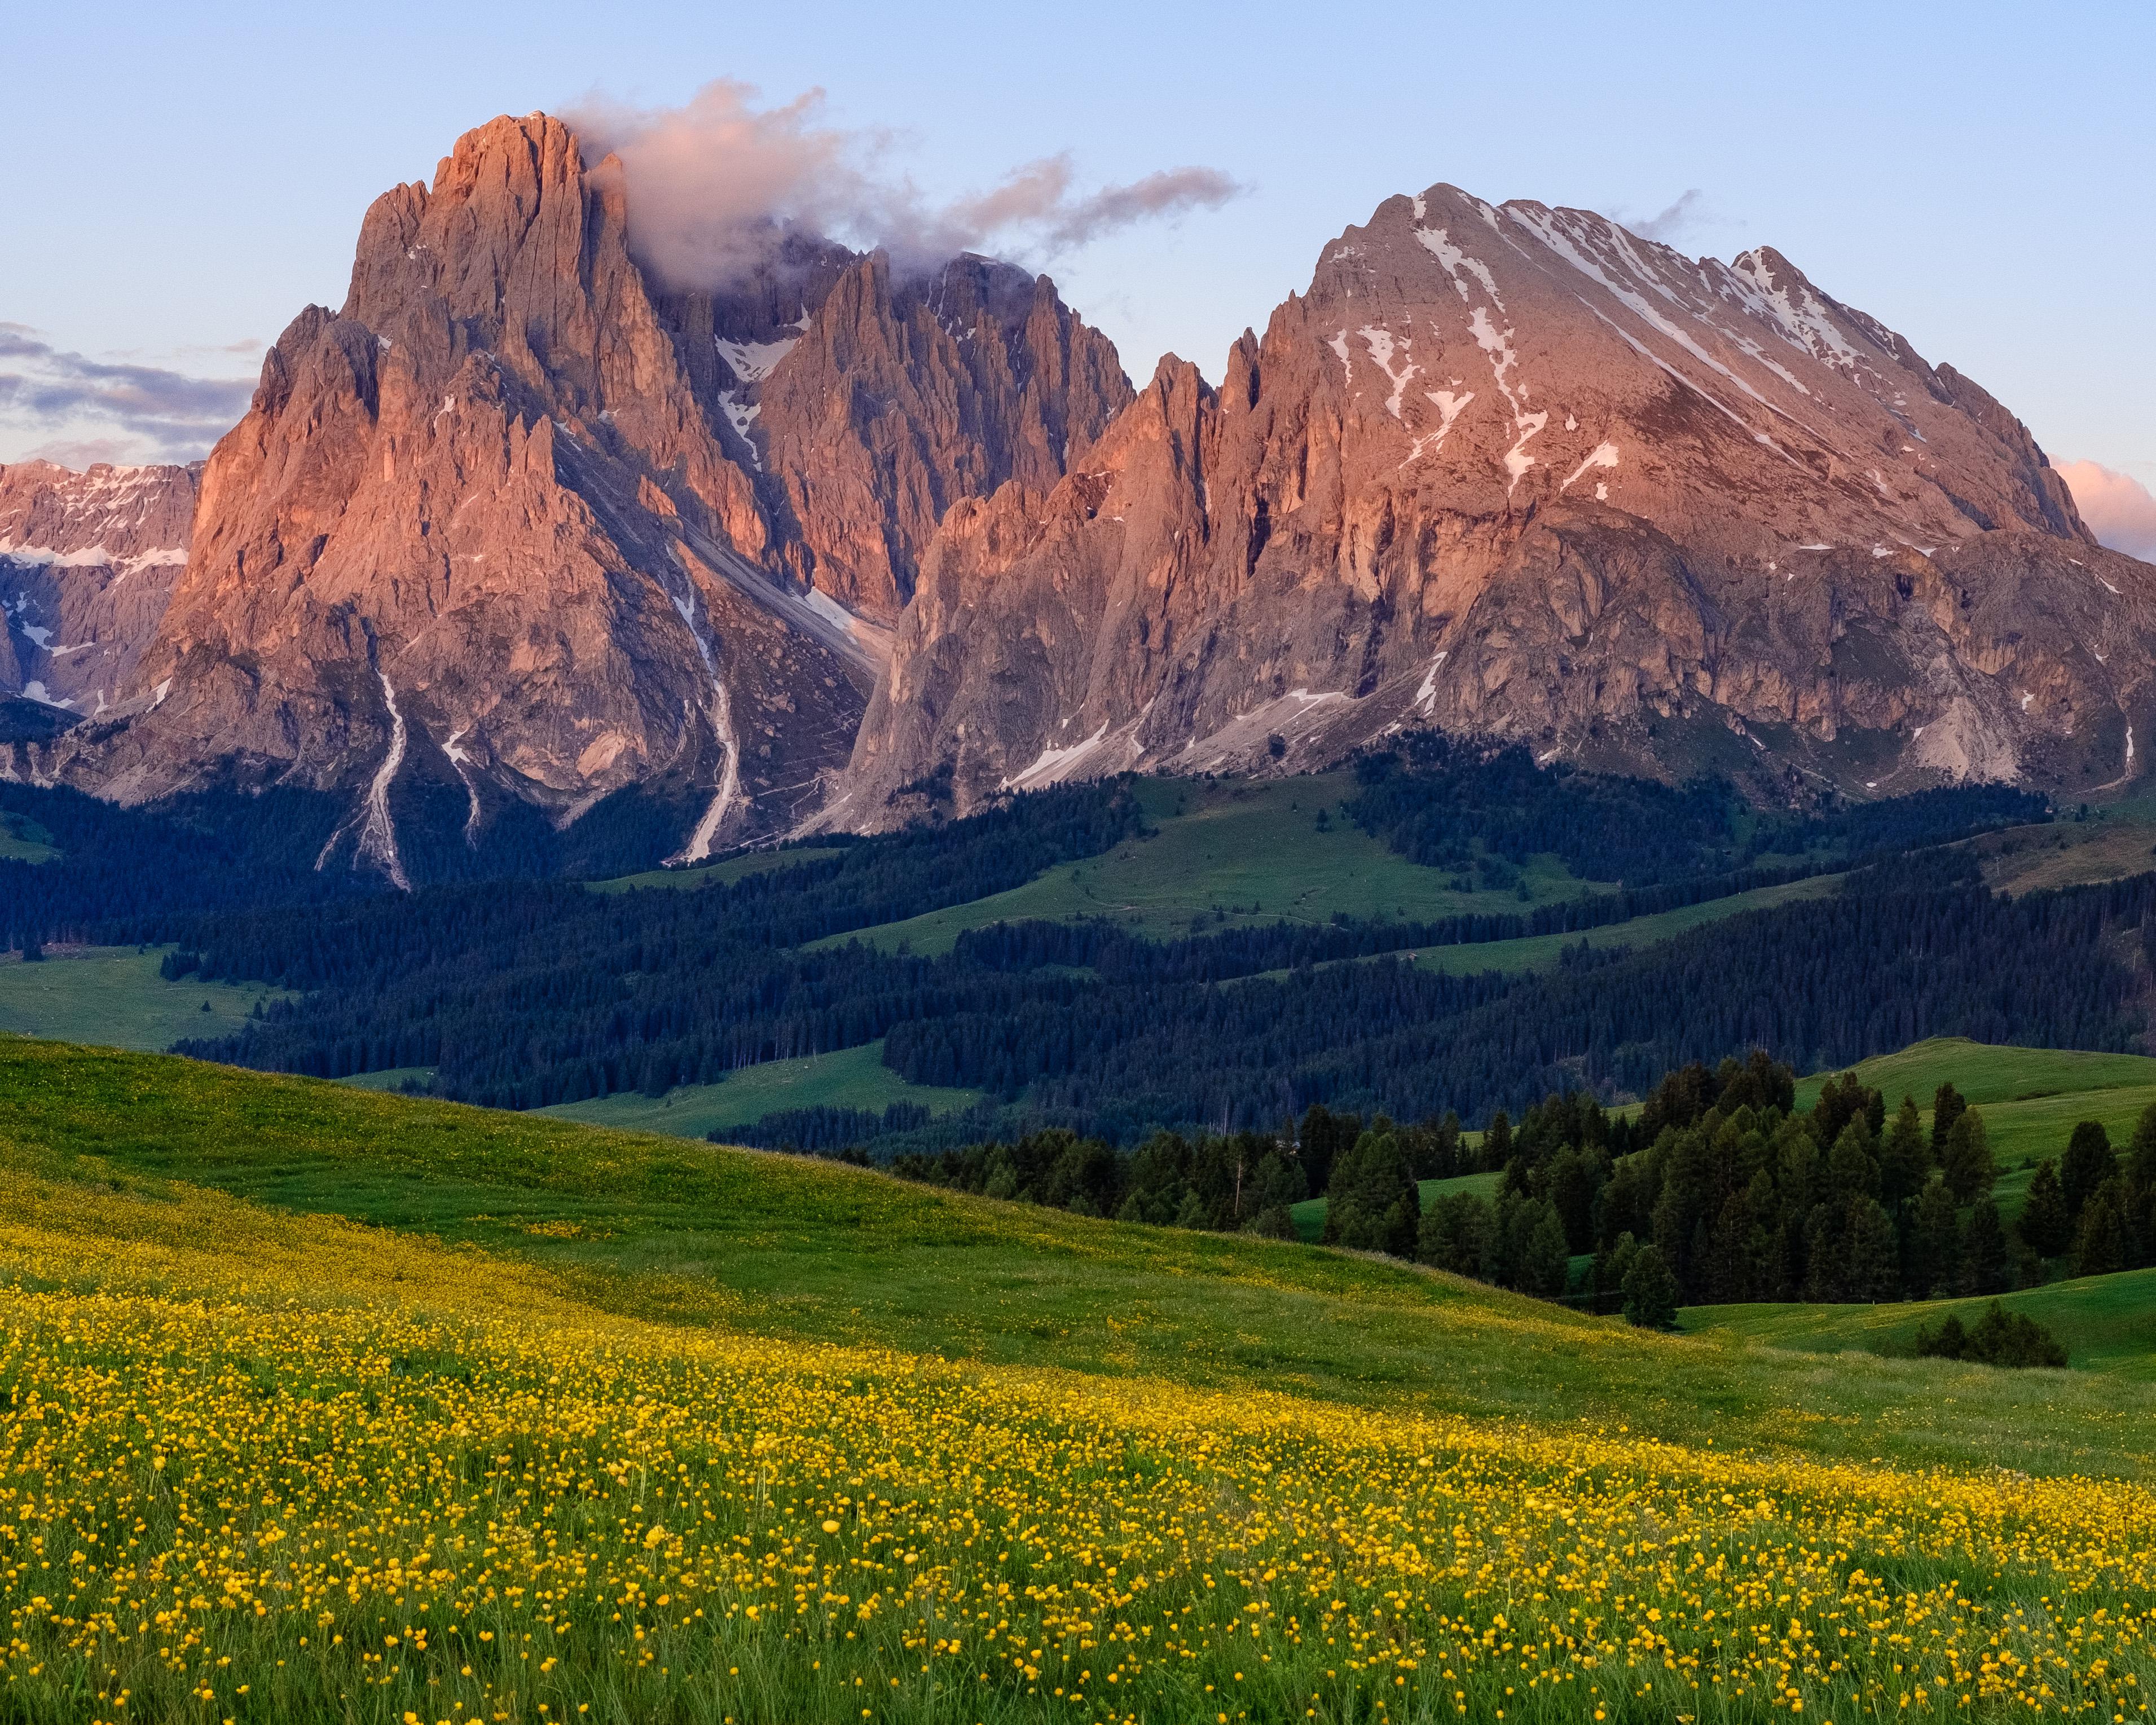 Dolomites 4K wallpaper for your desktop or mobile screen free